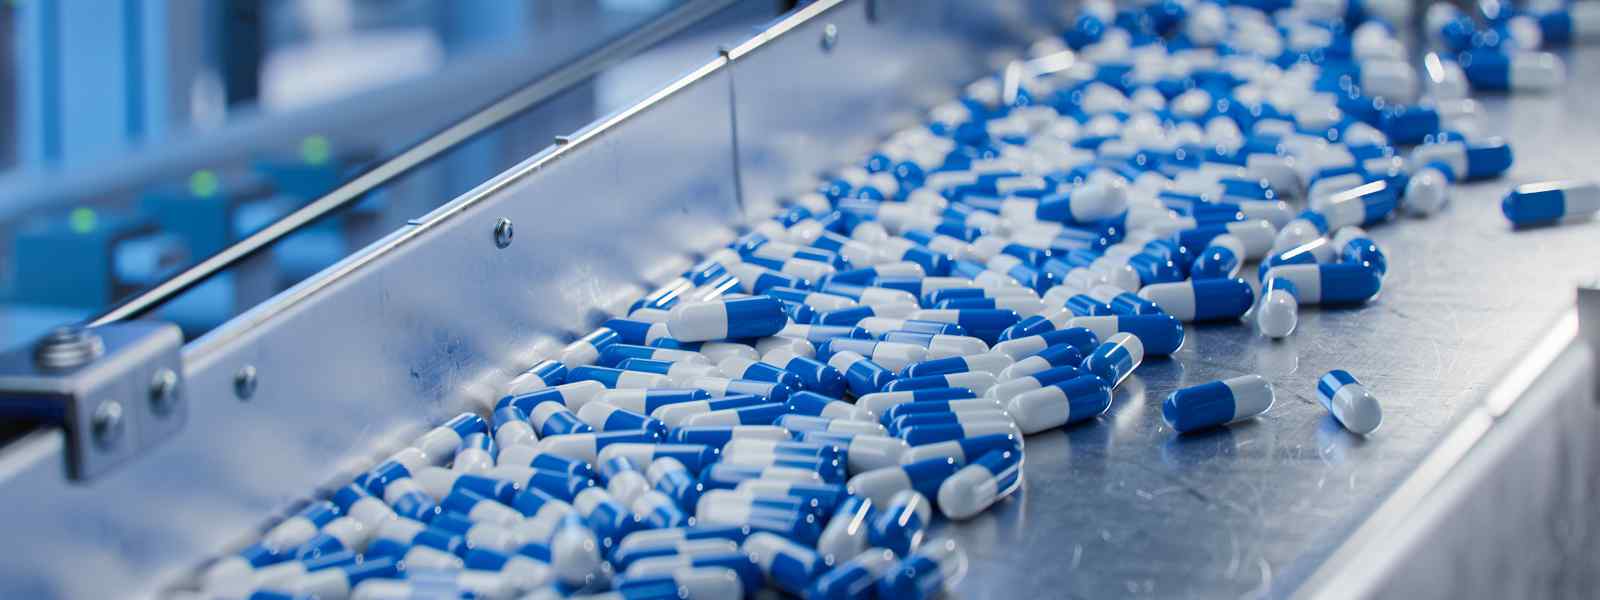 Medicines being manufactured